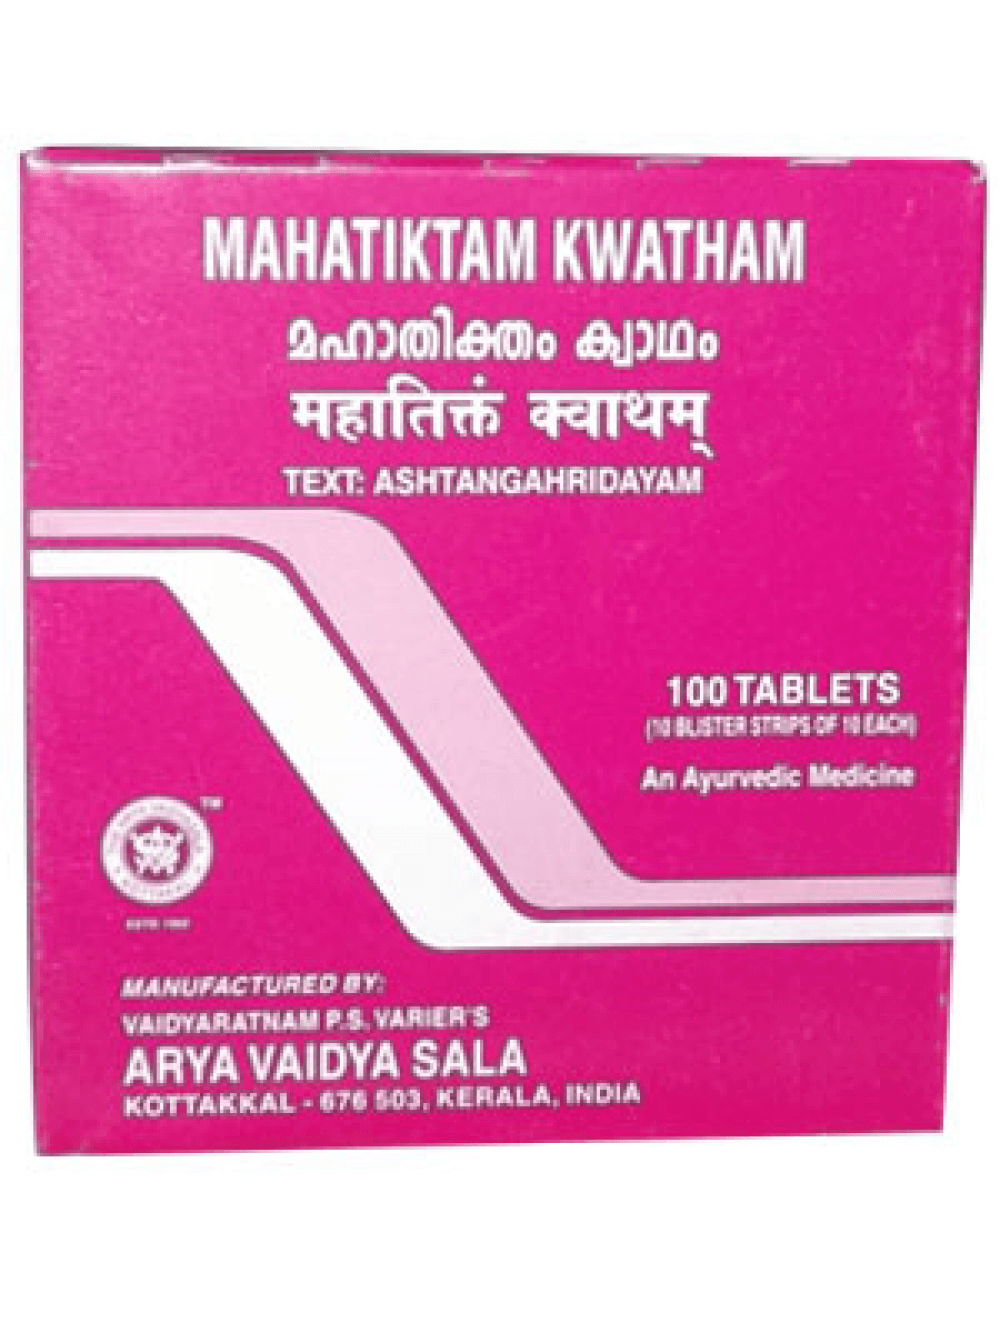 Kottakkal Arya Vaidyasala - Mahatiktam Kwatham Tablets